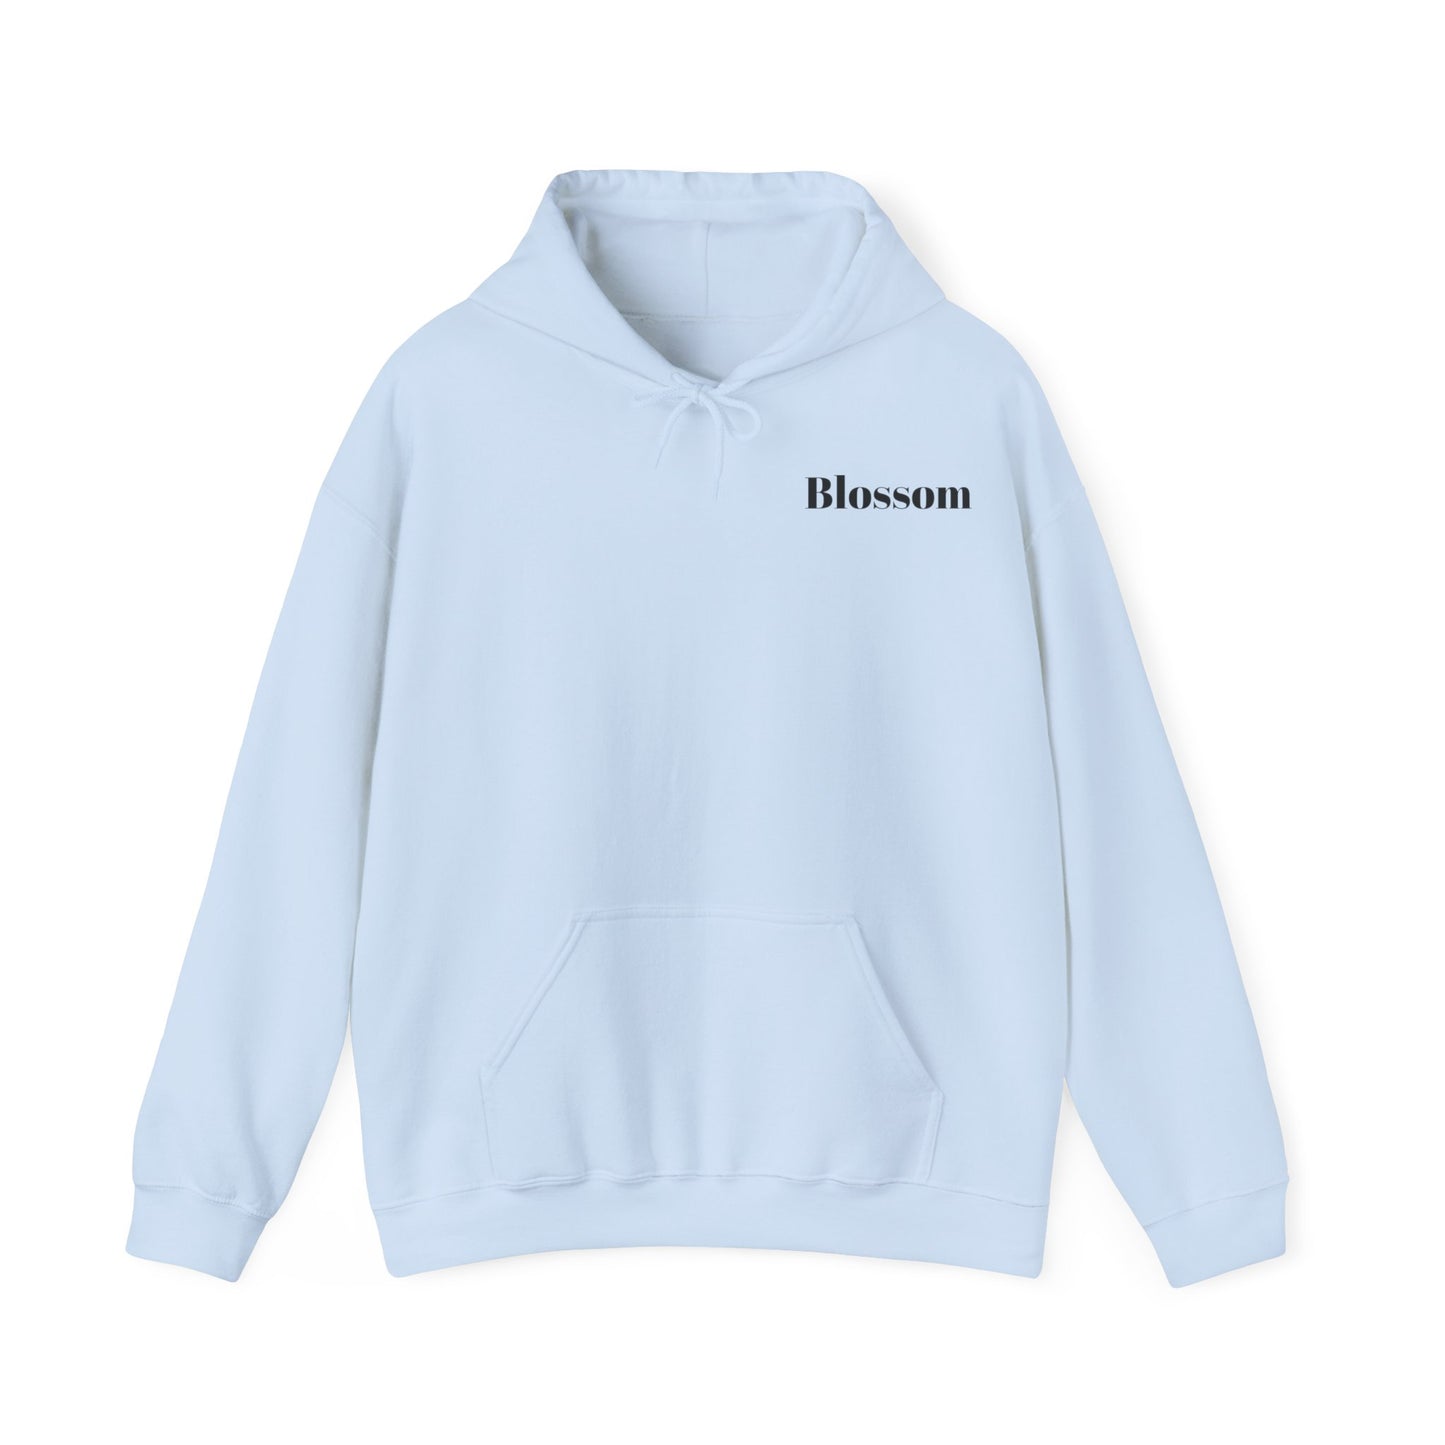 Blossom Unisex Hooded Sweatshirt with Heavy Blend Fabric1